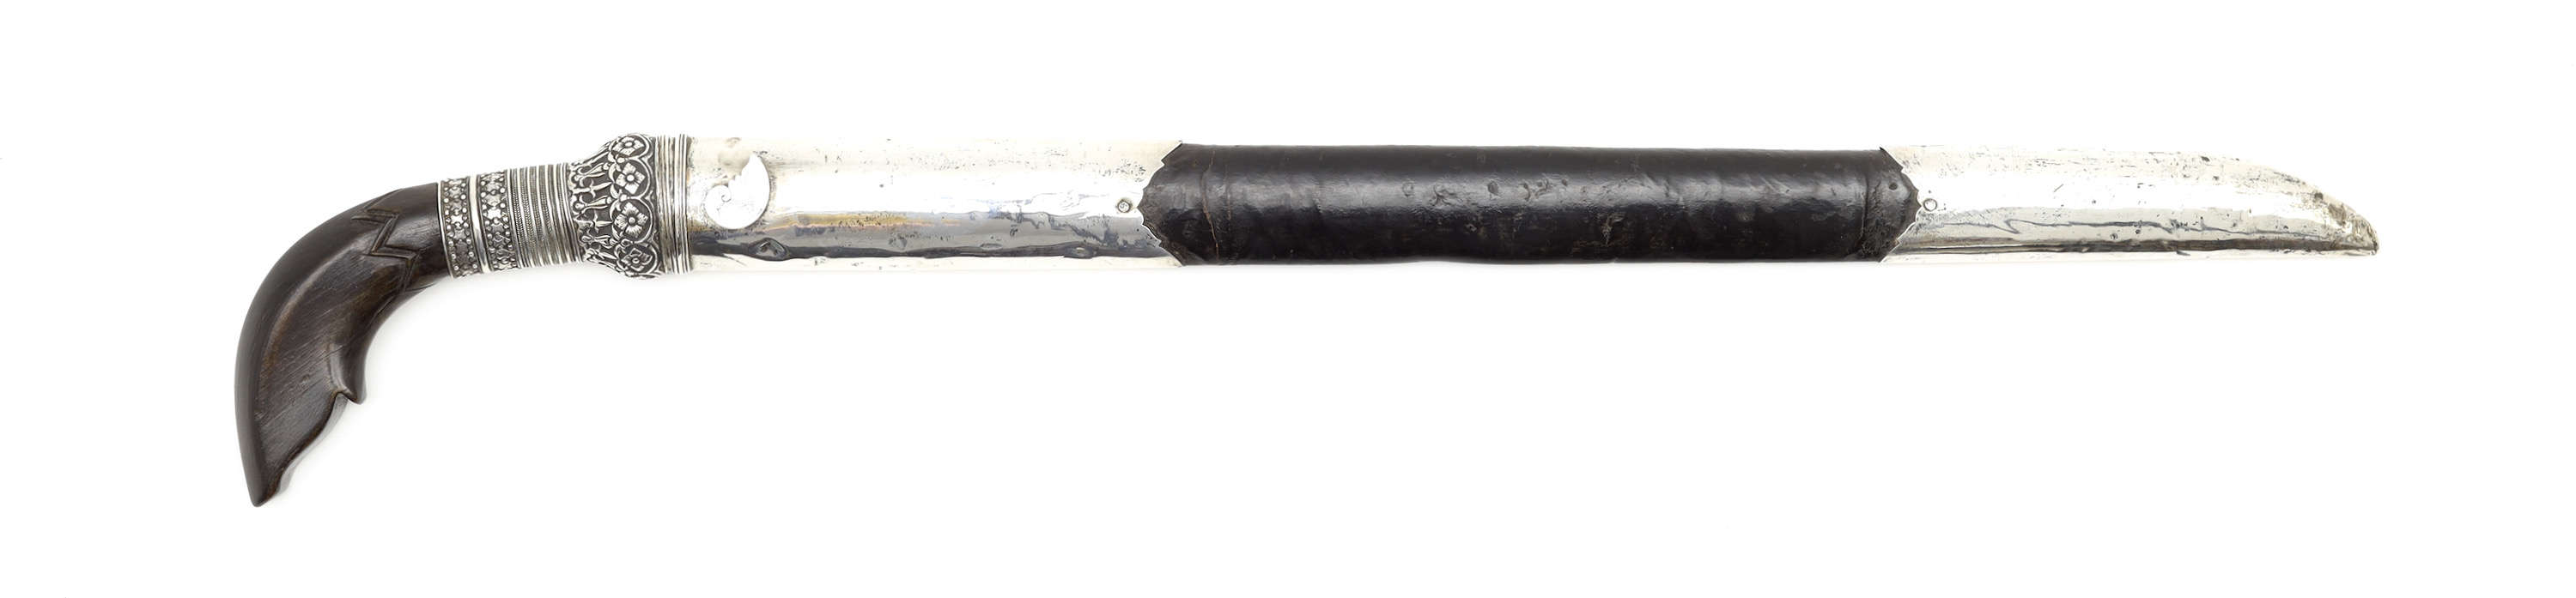 South Sulawesi sword VOC marked blade